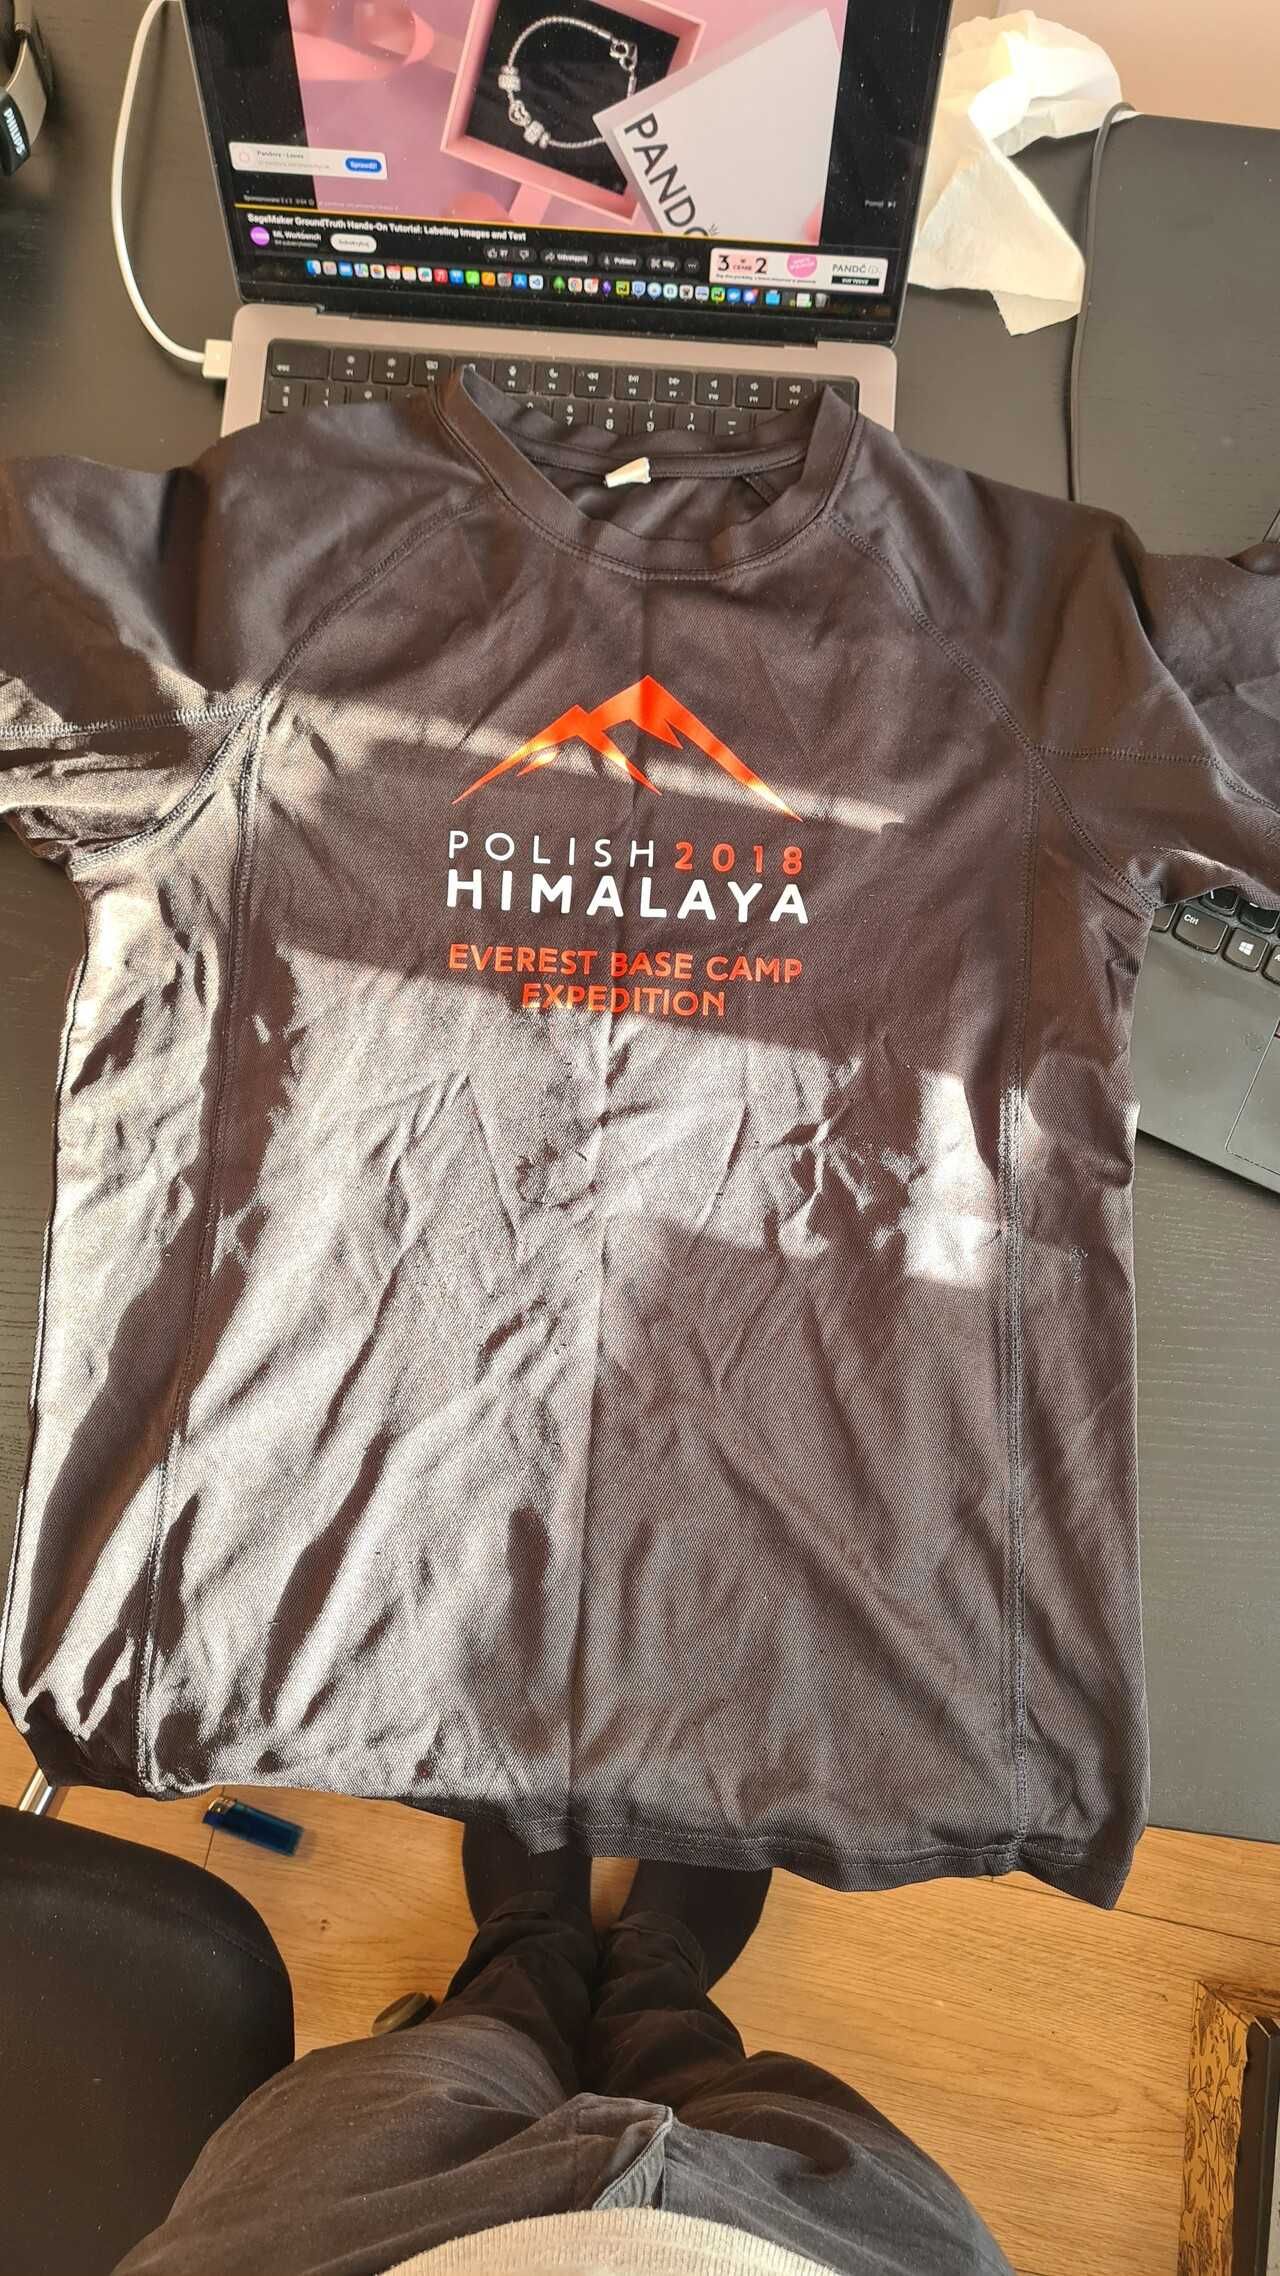 Czarny Sportowy T-shirt pl himalaya 2018 EVEREST base camp EXPEDITION